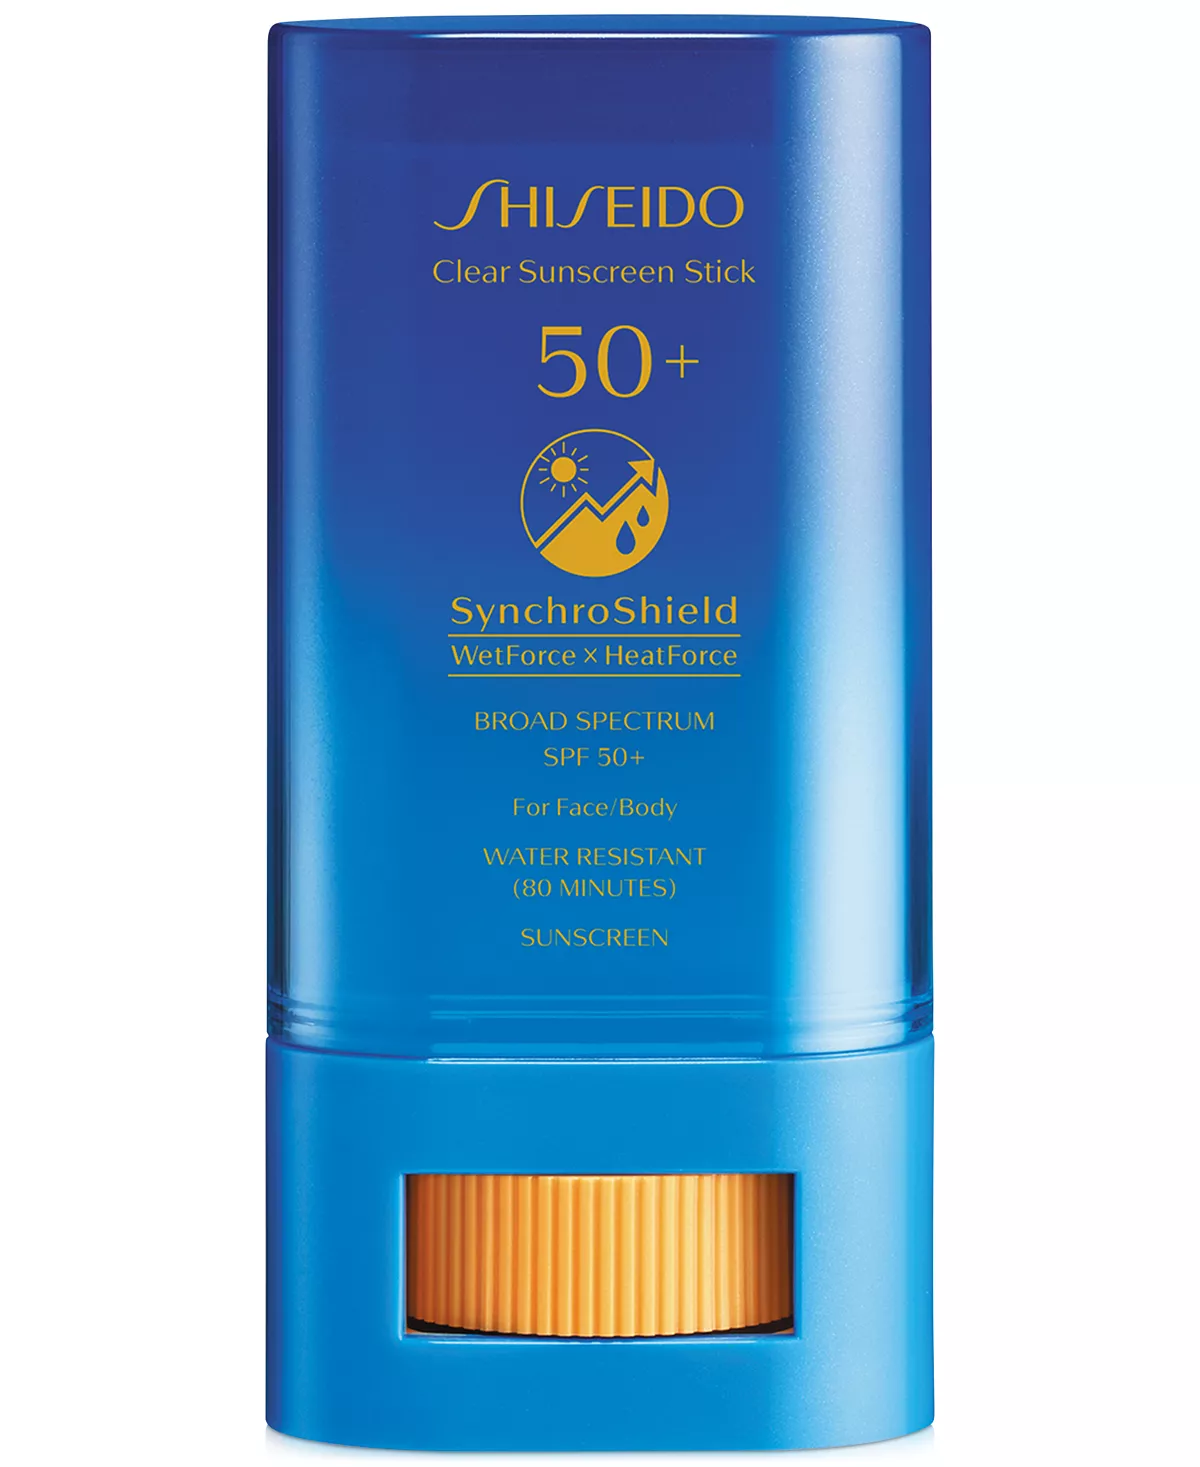 Shiseido Clear Sunscreen Stick SPF 50+, 20 g Discounts and Cashback